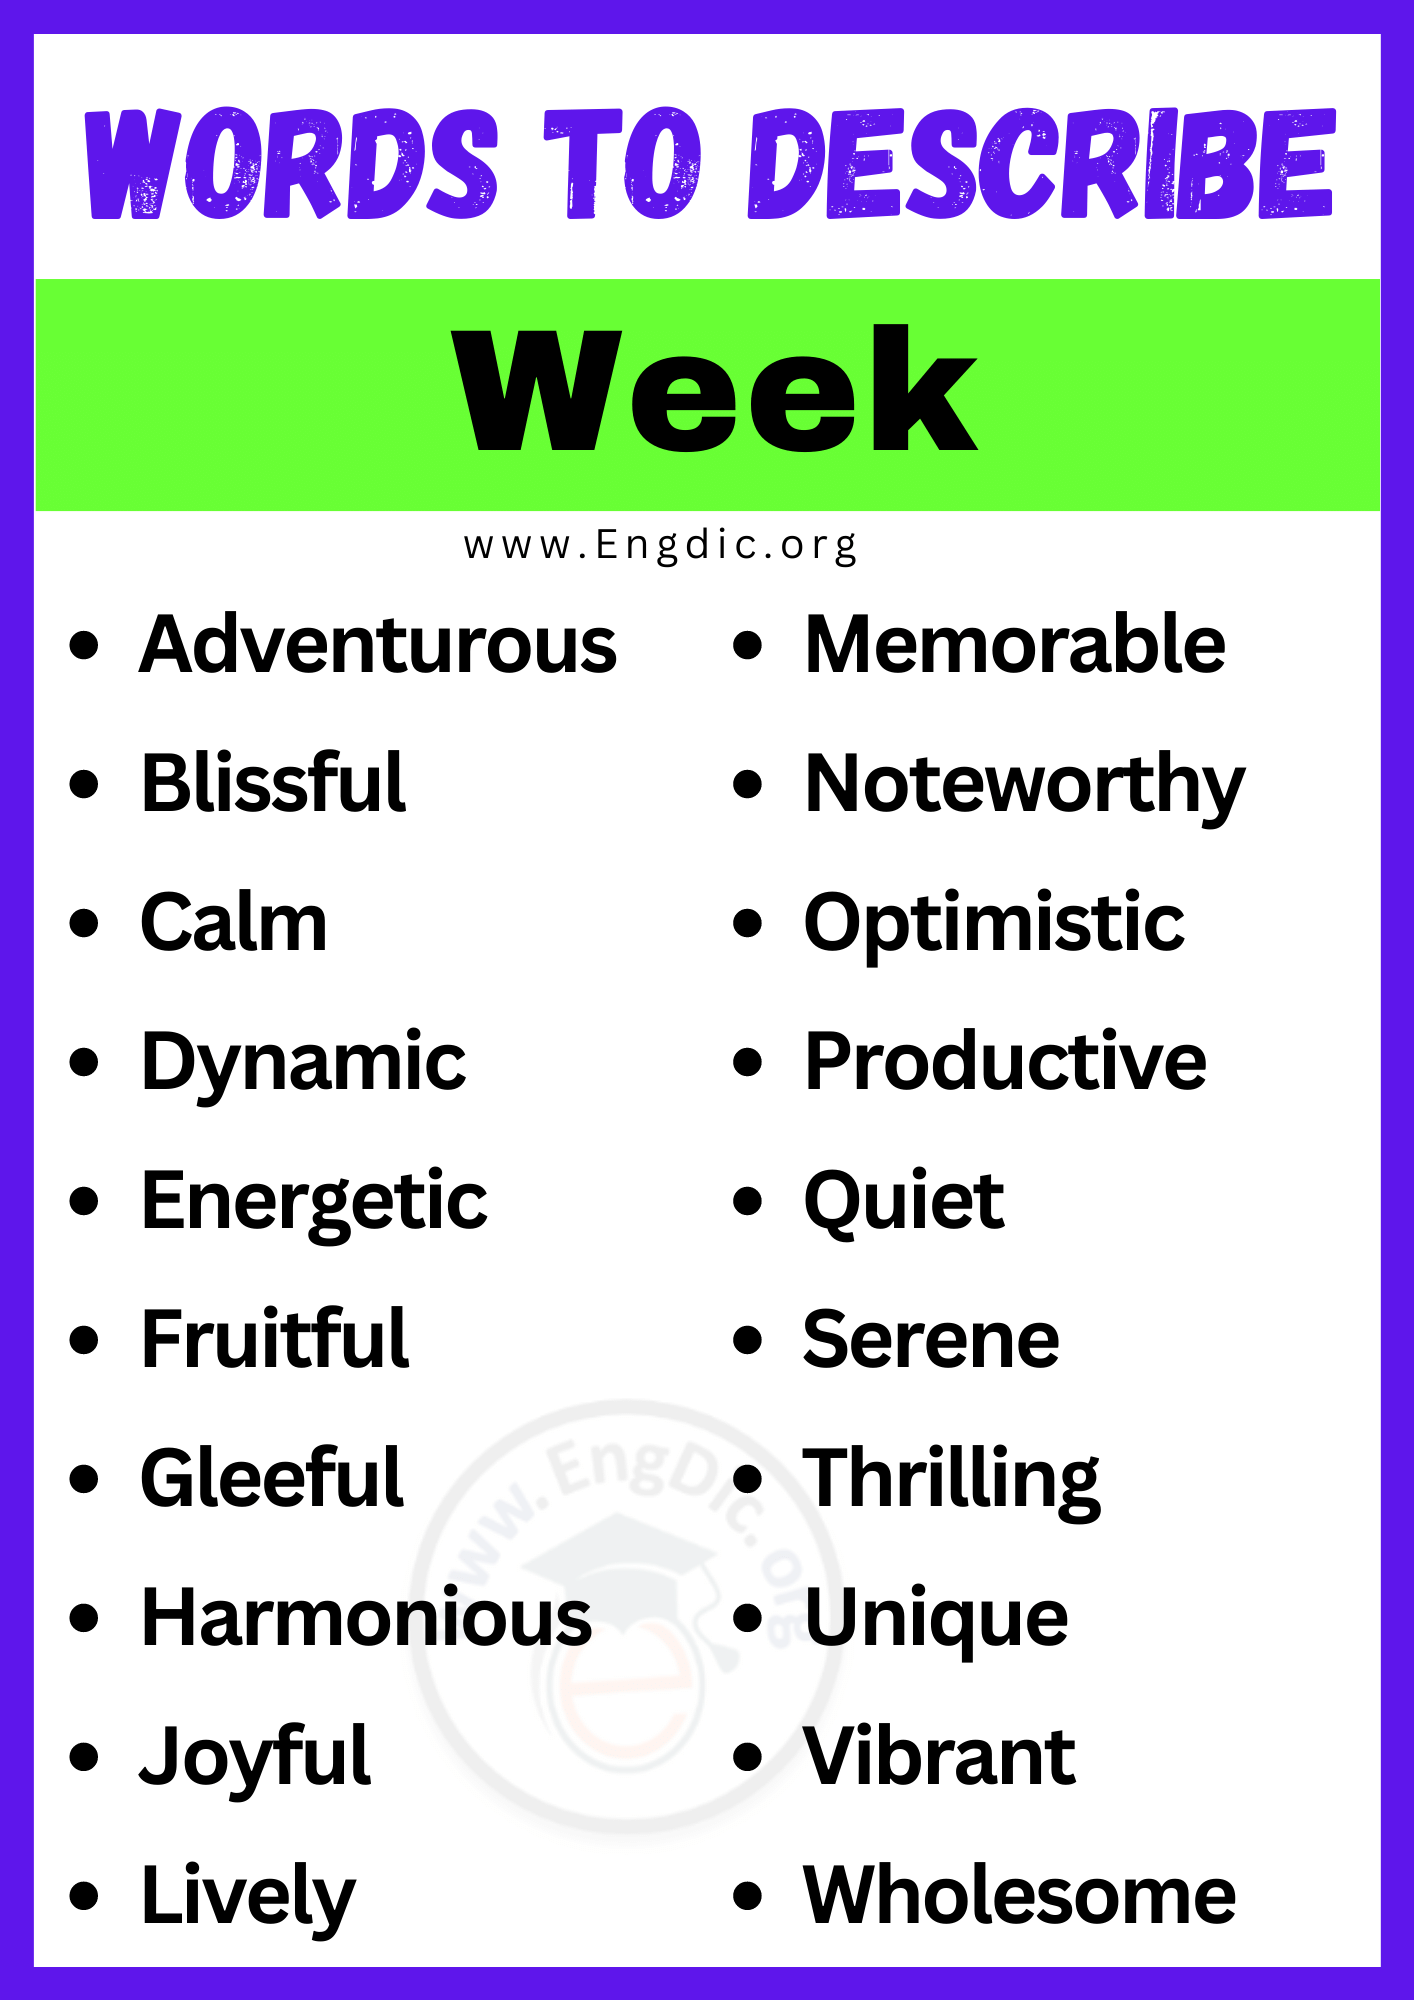 Words to Describe Week